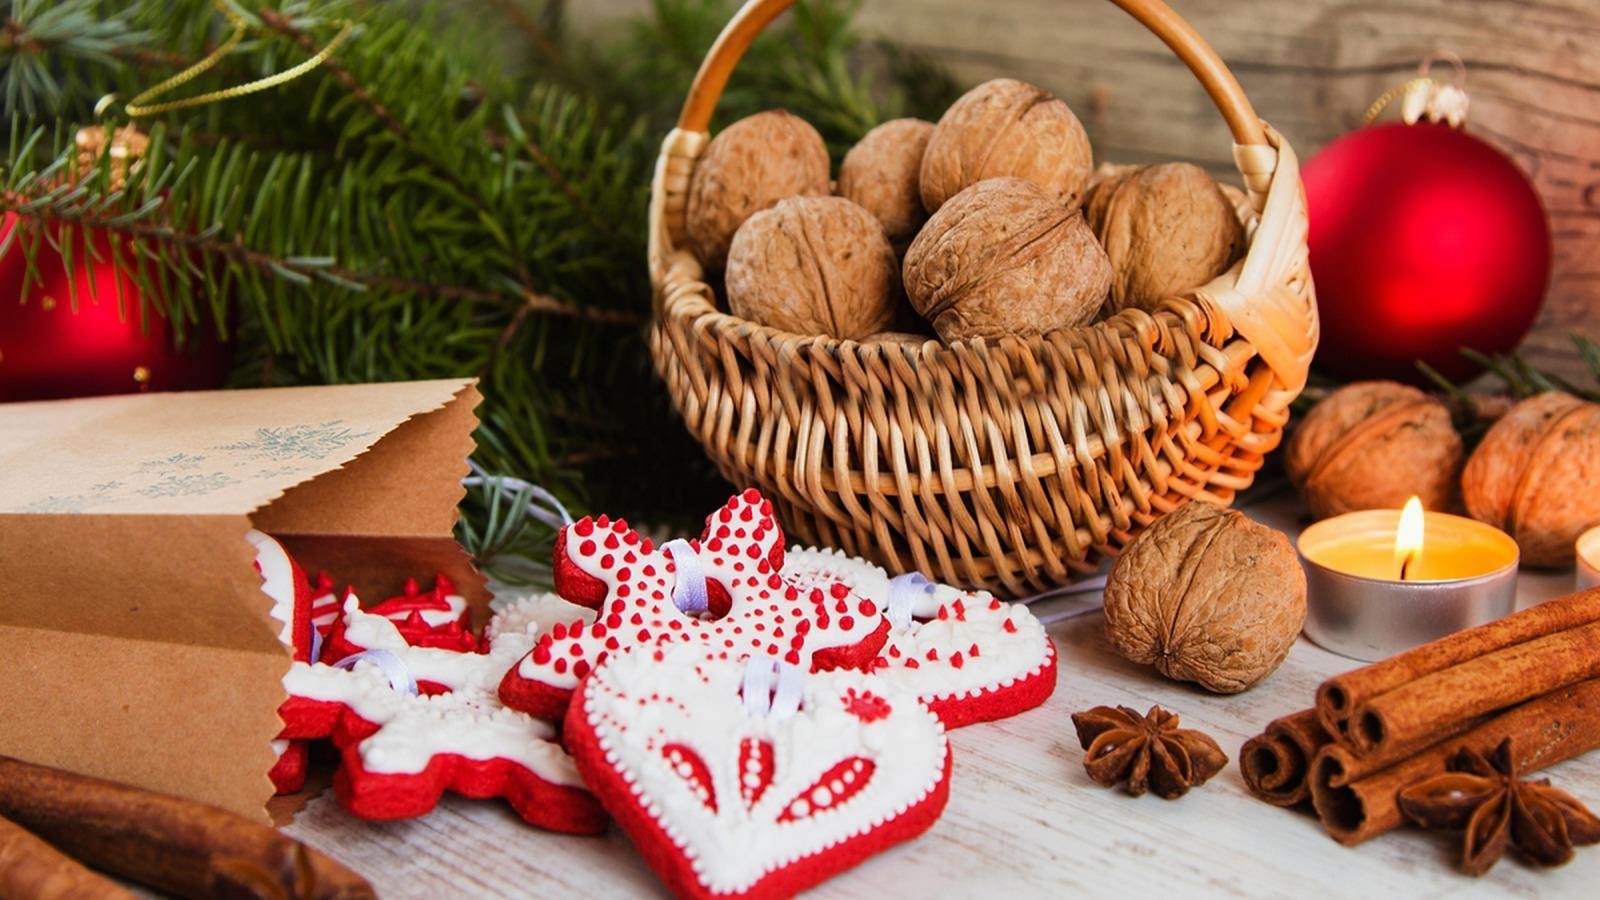 cookies, abstract, Christmas, walnuts, still life wallpaper